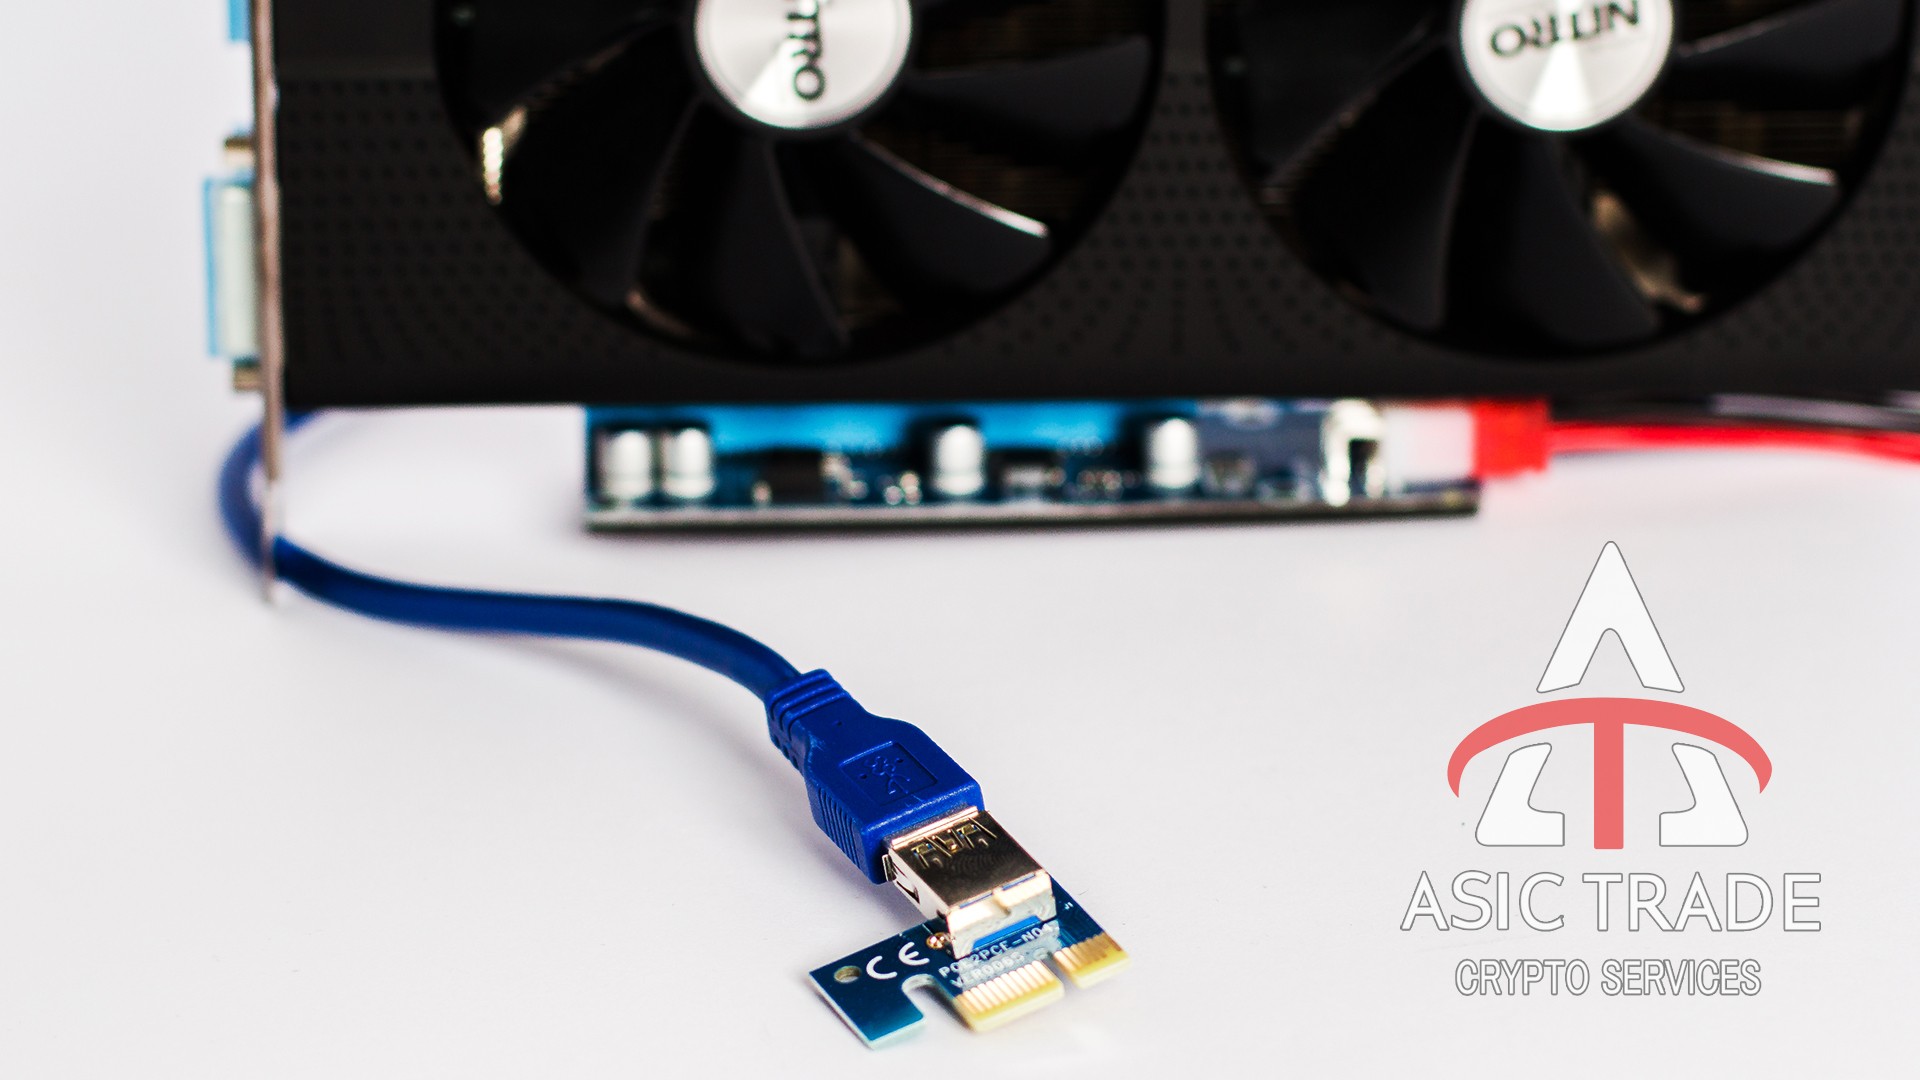 Riser PCI-E 1x to 16x 60cm USB 3.0